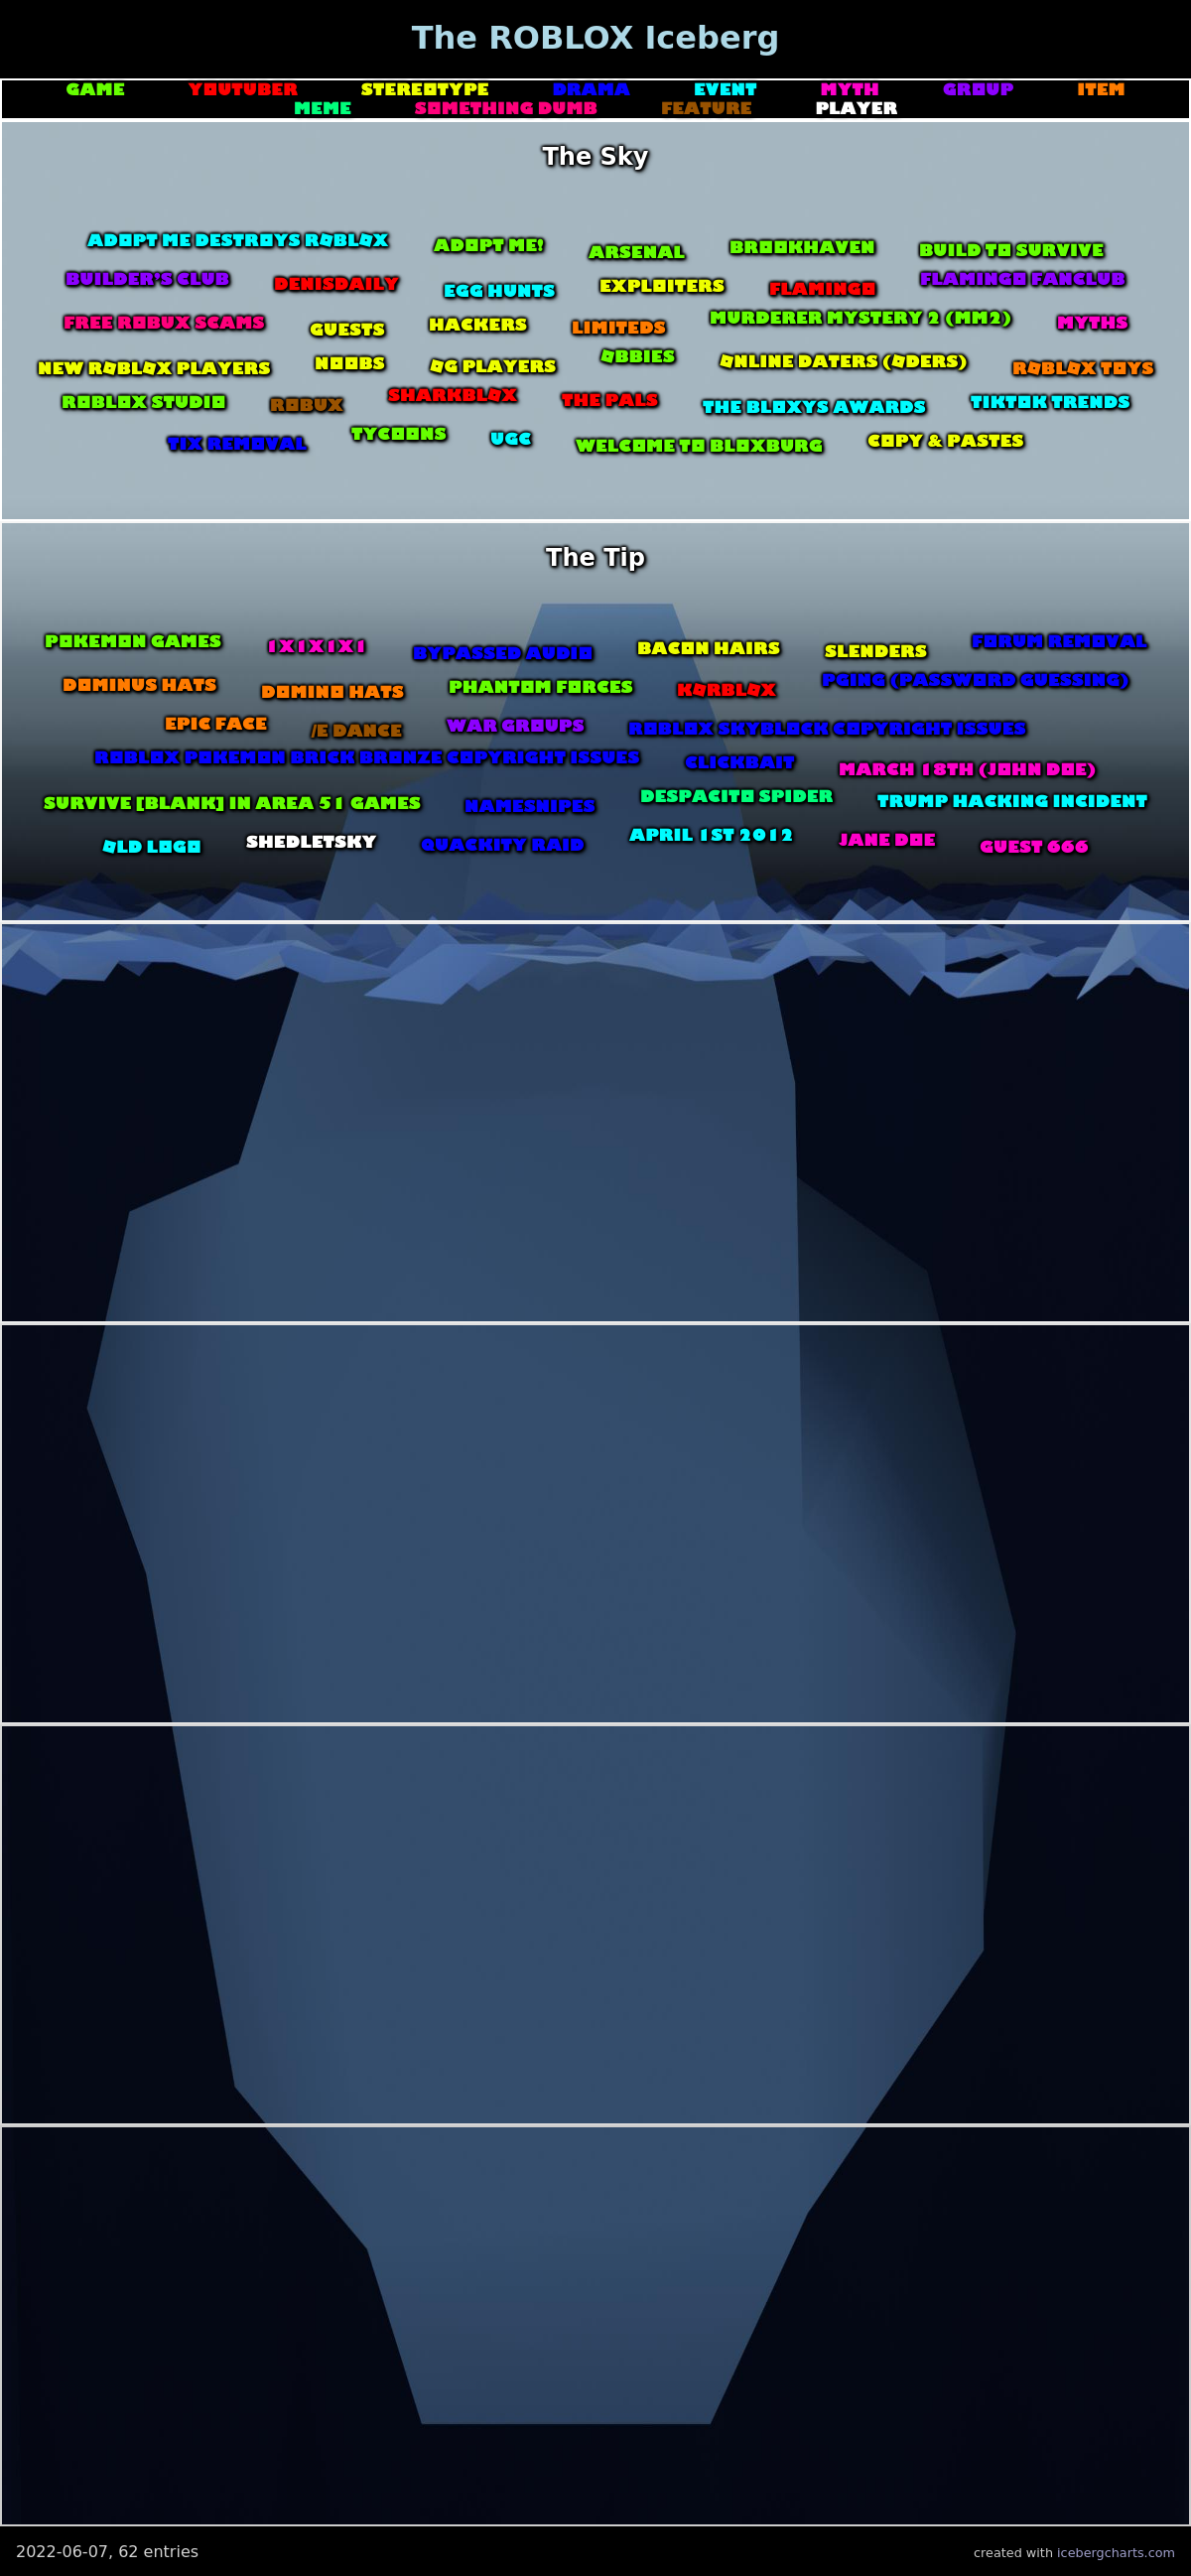 The ROBLOX Iceberg